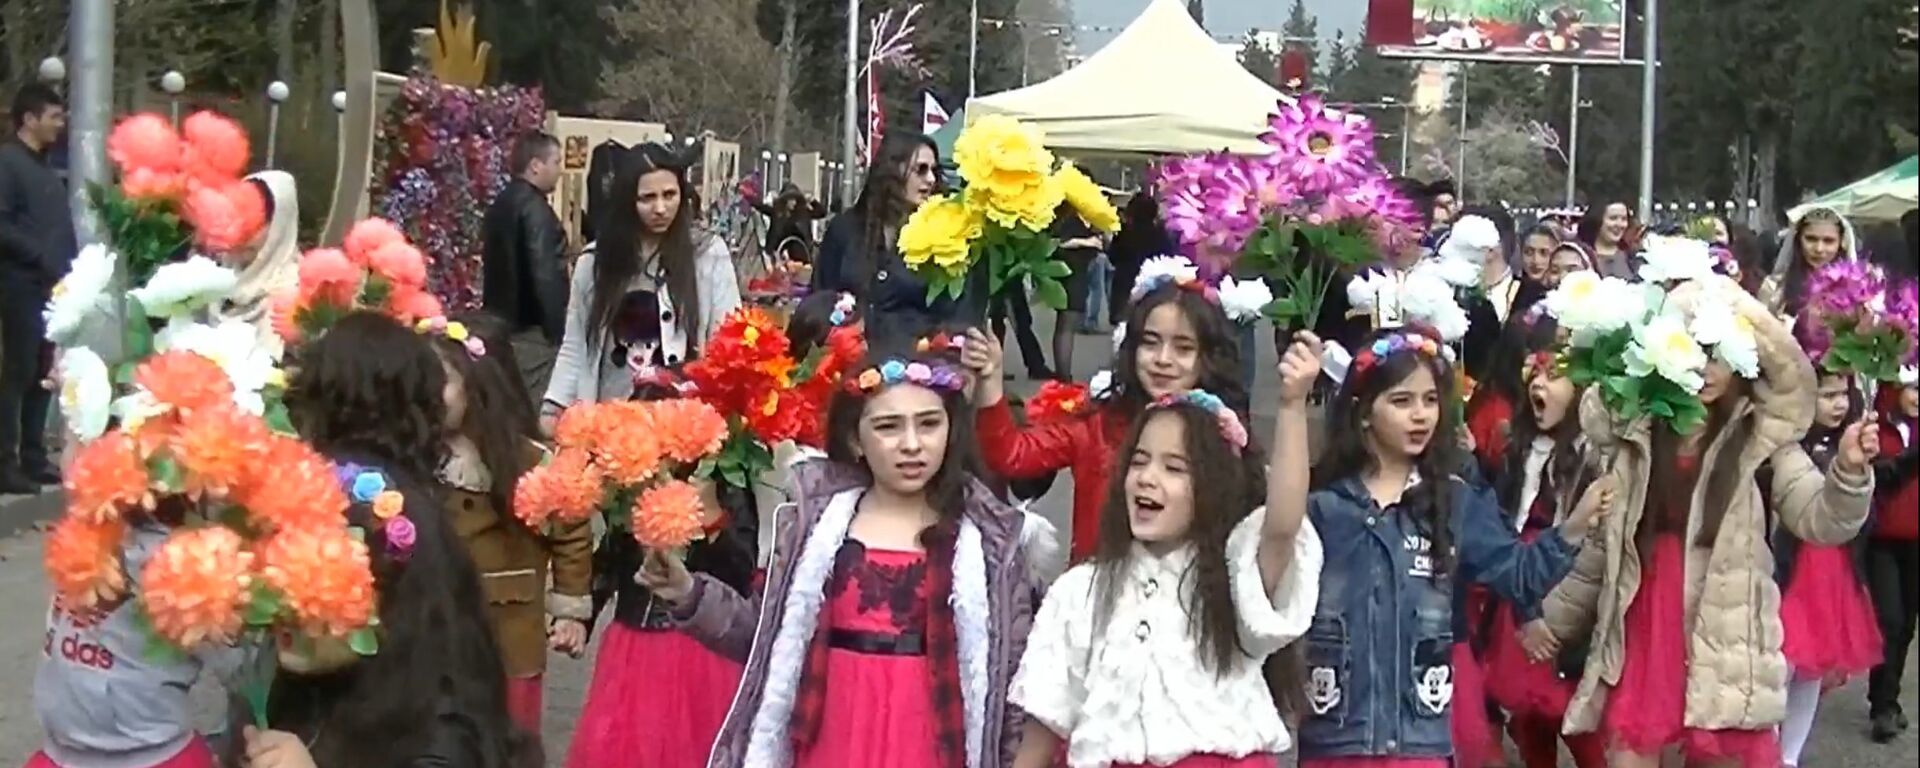 Праздник весны: как Новруз-байрам отметили азербайджанцы в Марнеули - Sputnik Азербайджан, 1920, 25.03.2018